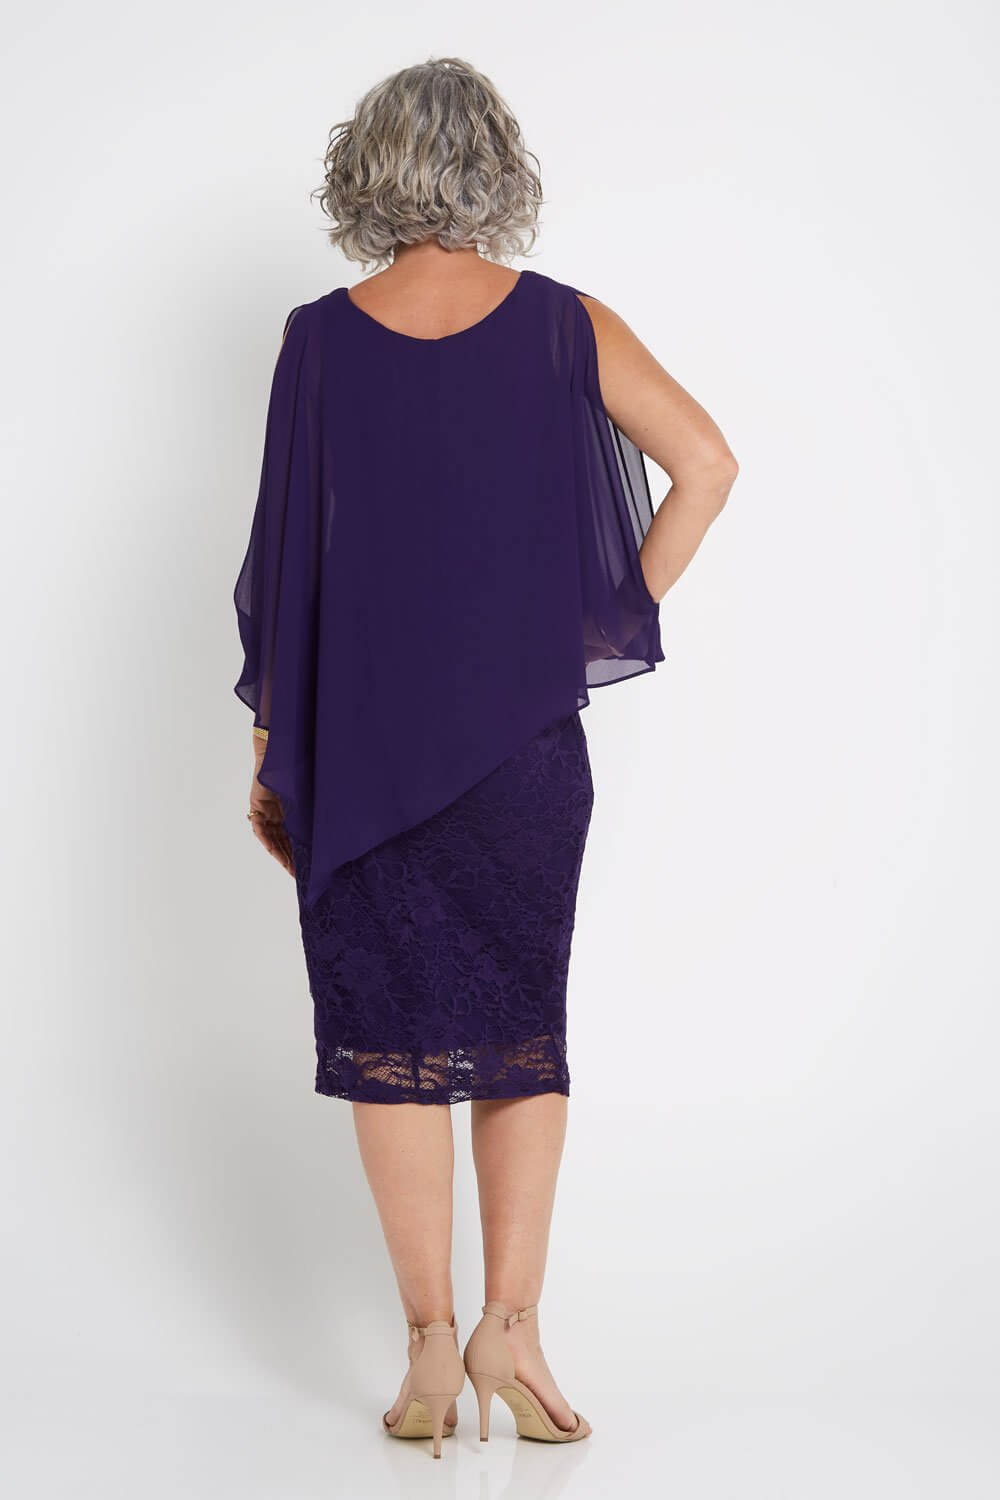 TULIO Fashion | Abigail Dress - Purple | New Arrivals – Tulio